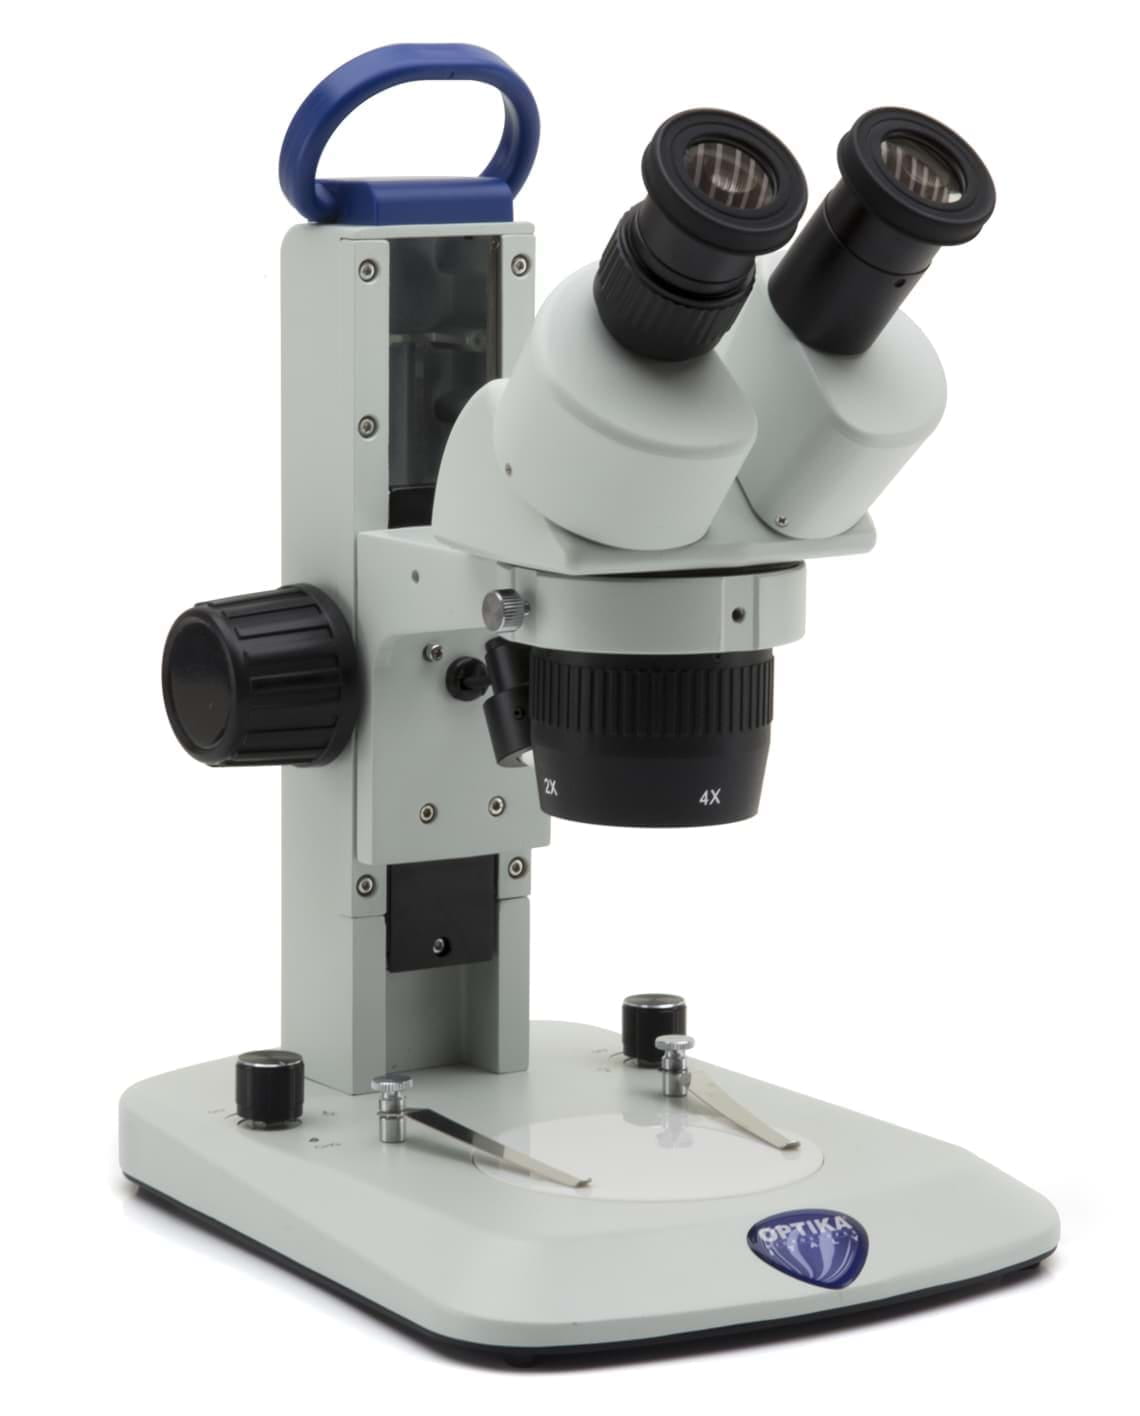 2x-4x SLX-1 Cordless binocular stereomicroscope